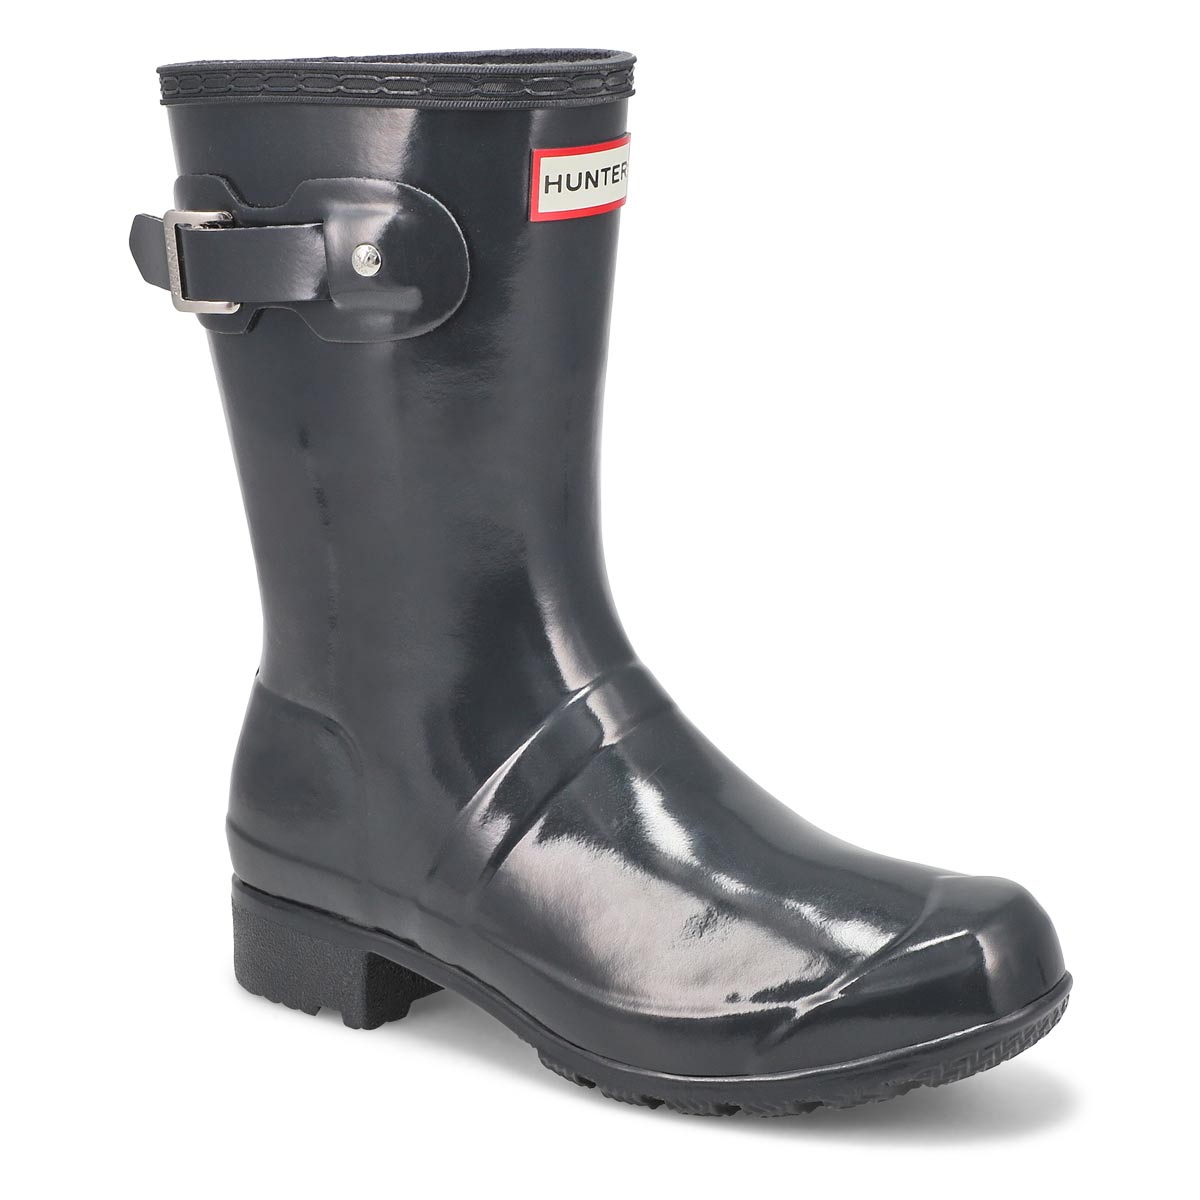 Softmoc Winter Boots Sale Price, Save 47% | jlcatj.gob.mx